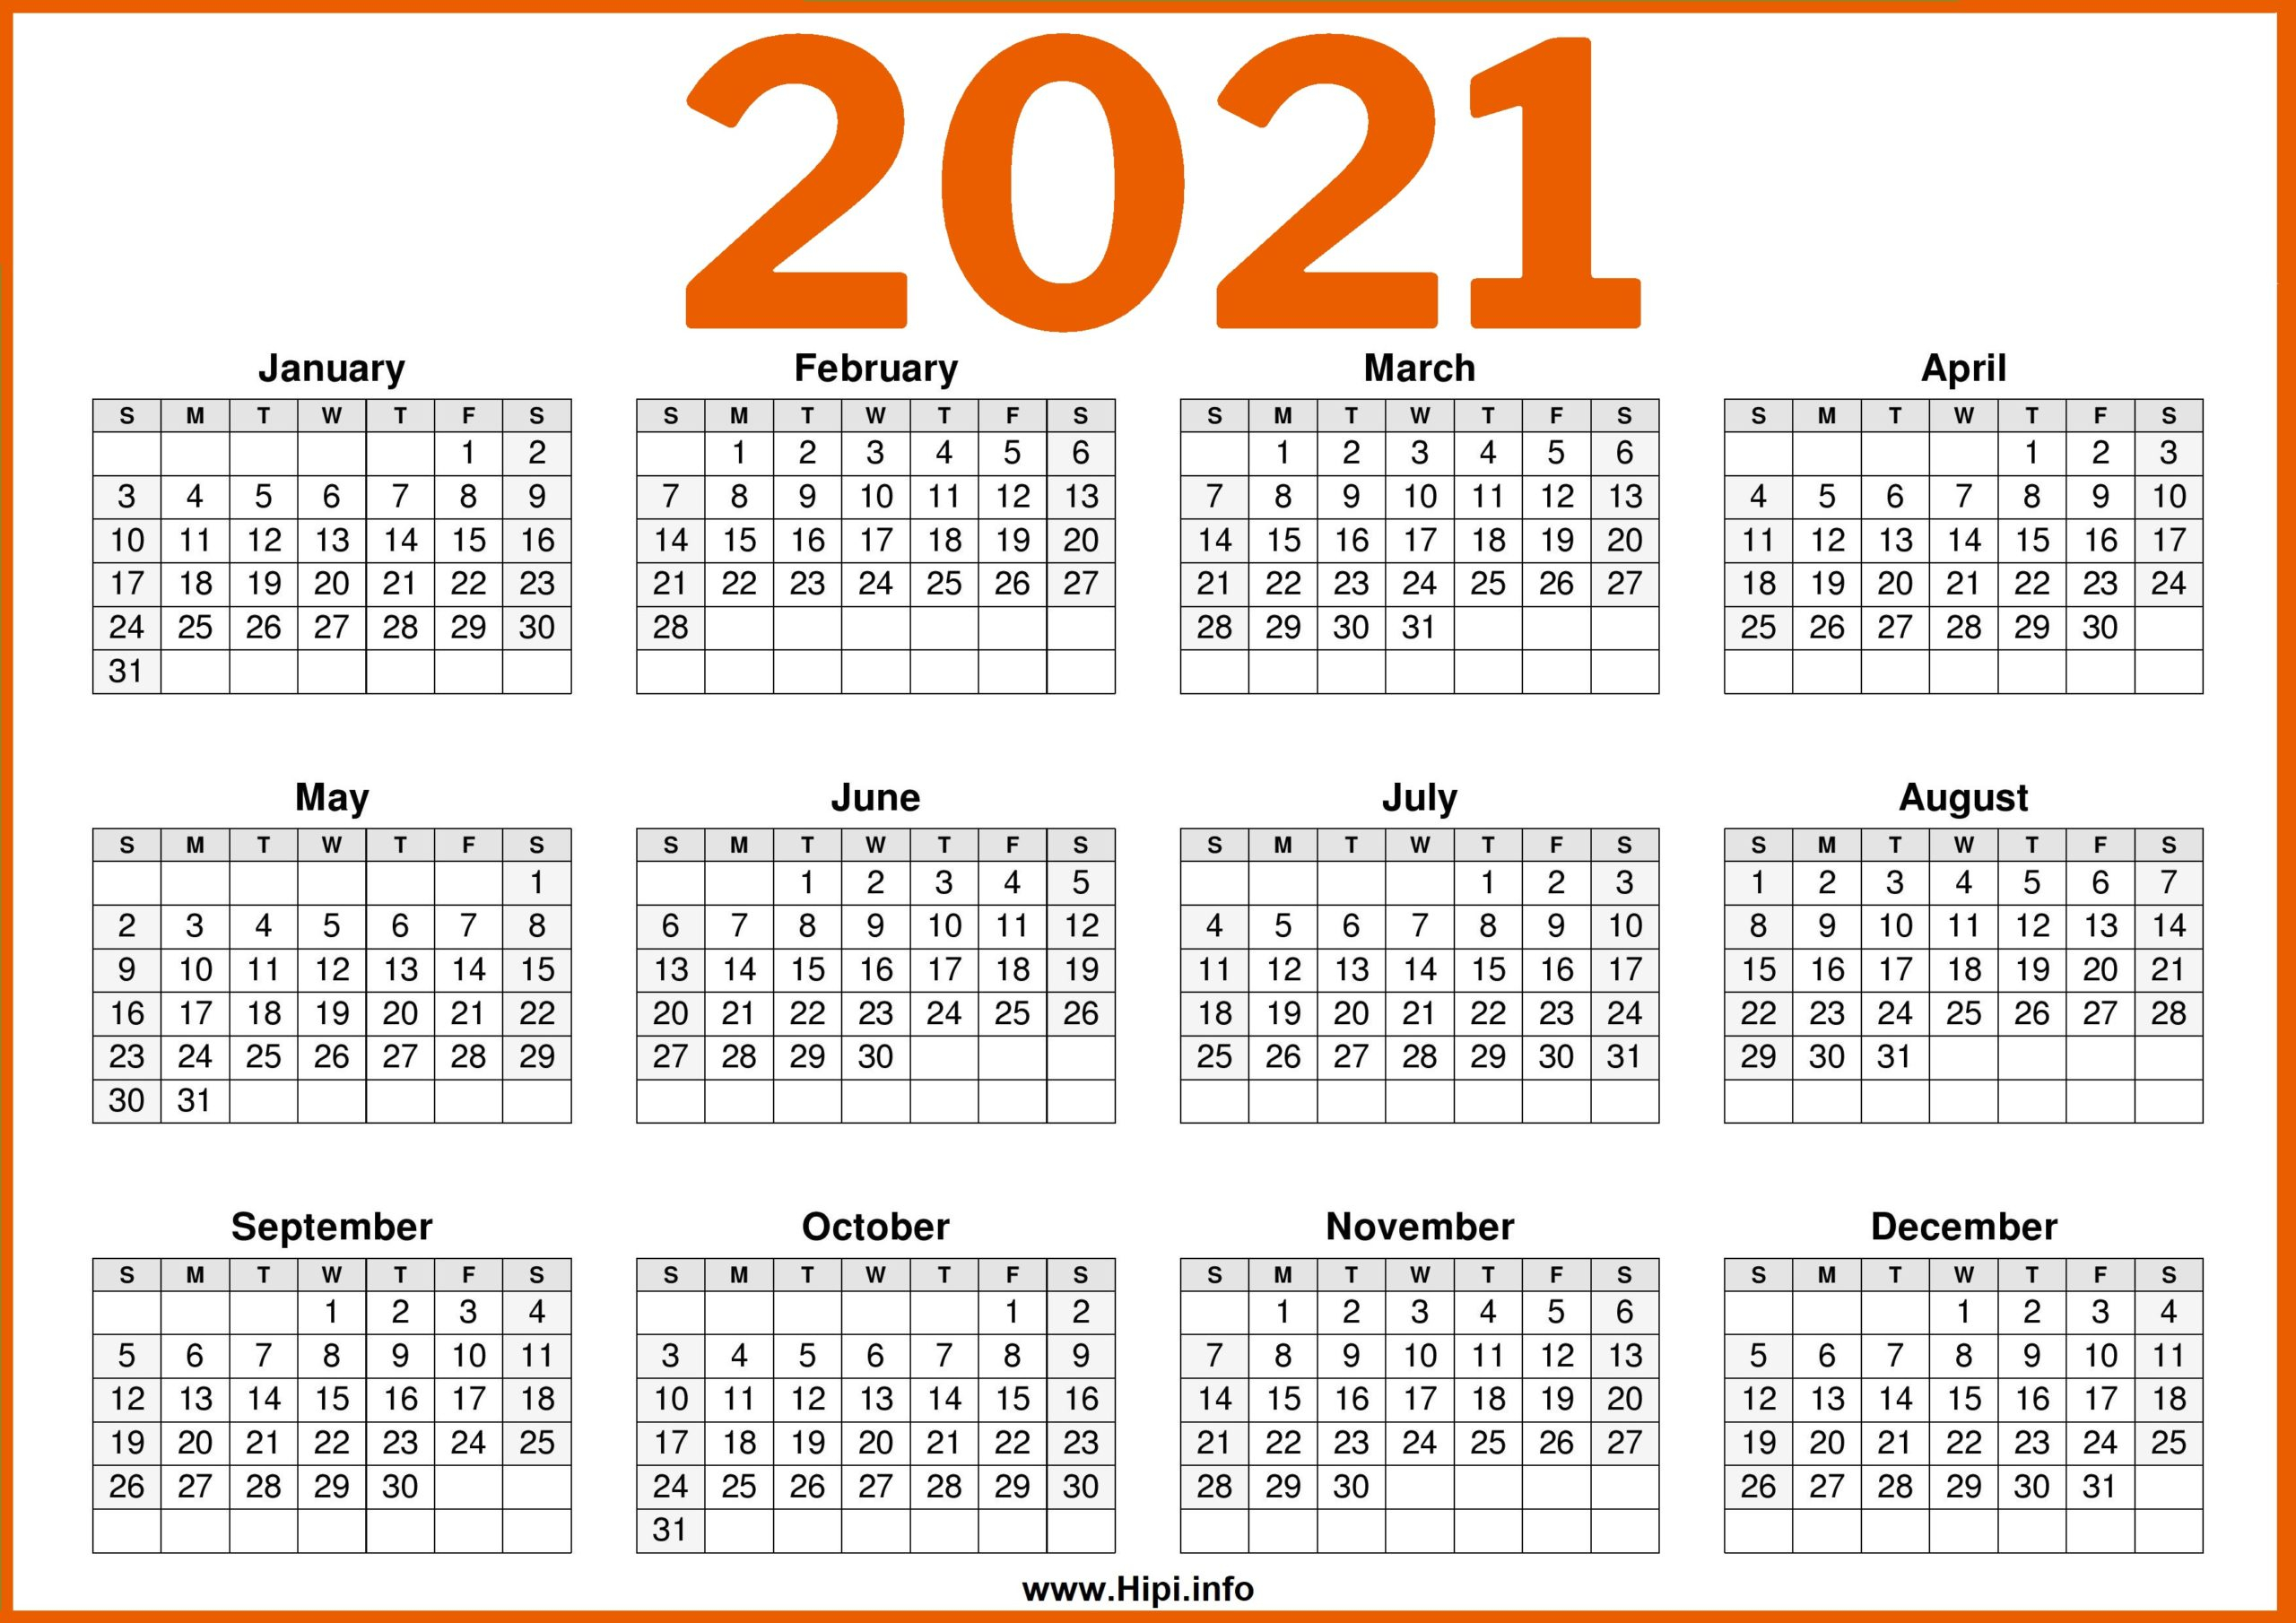 Free Printable Downloadable 2021 Calendars Hipi info Calendars